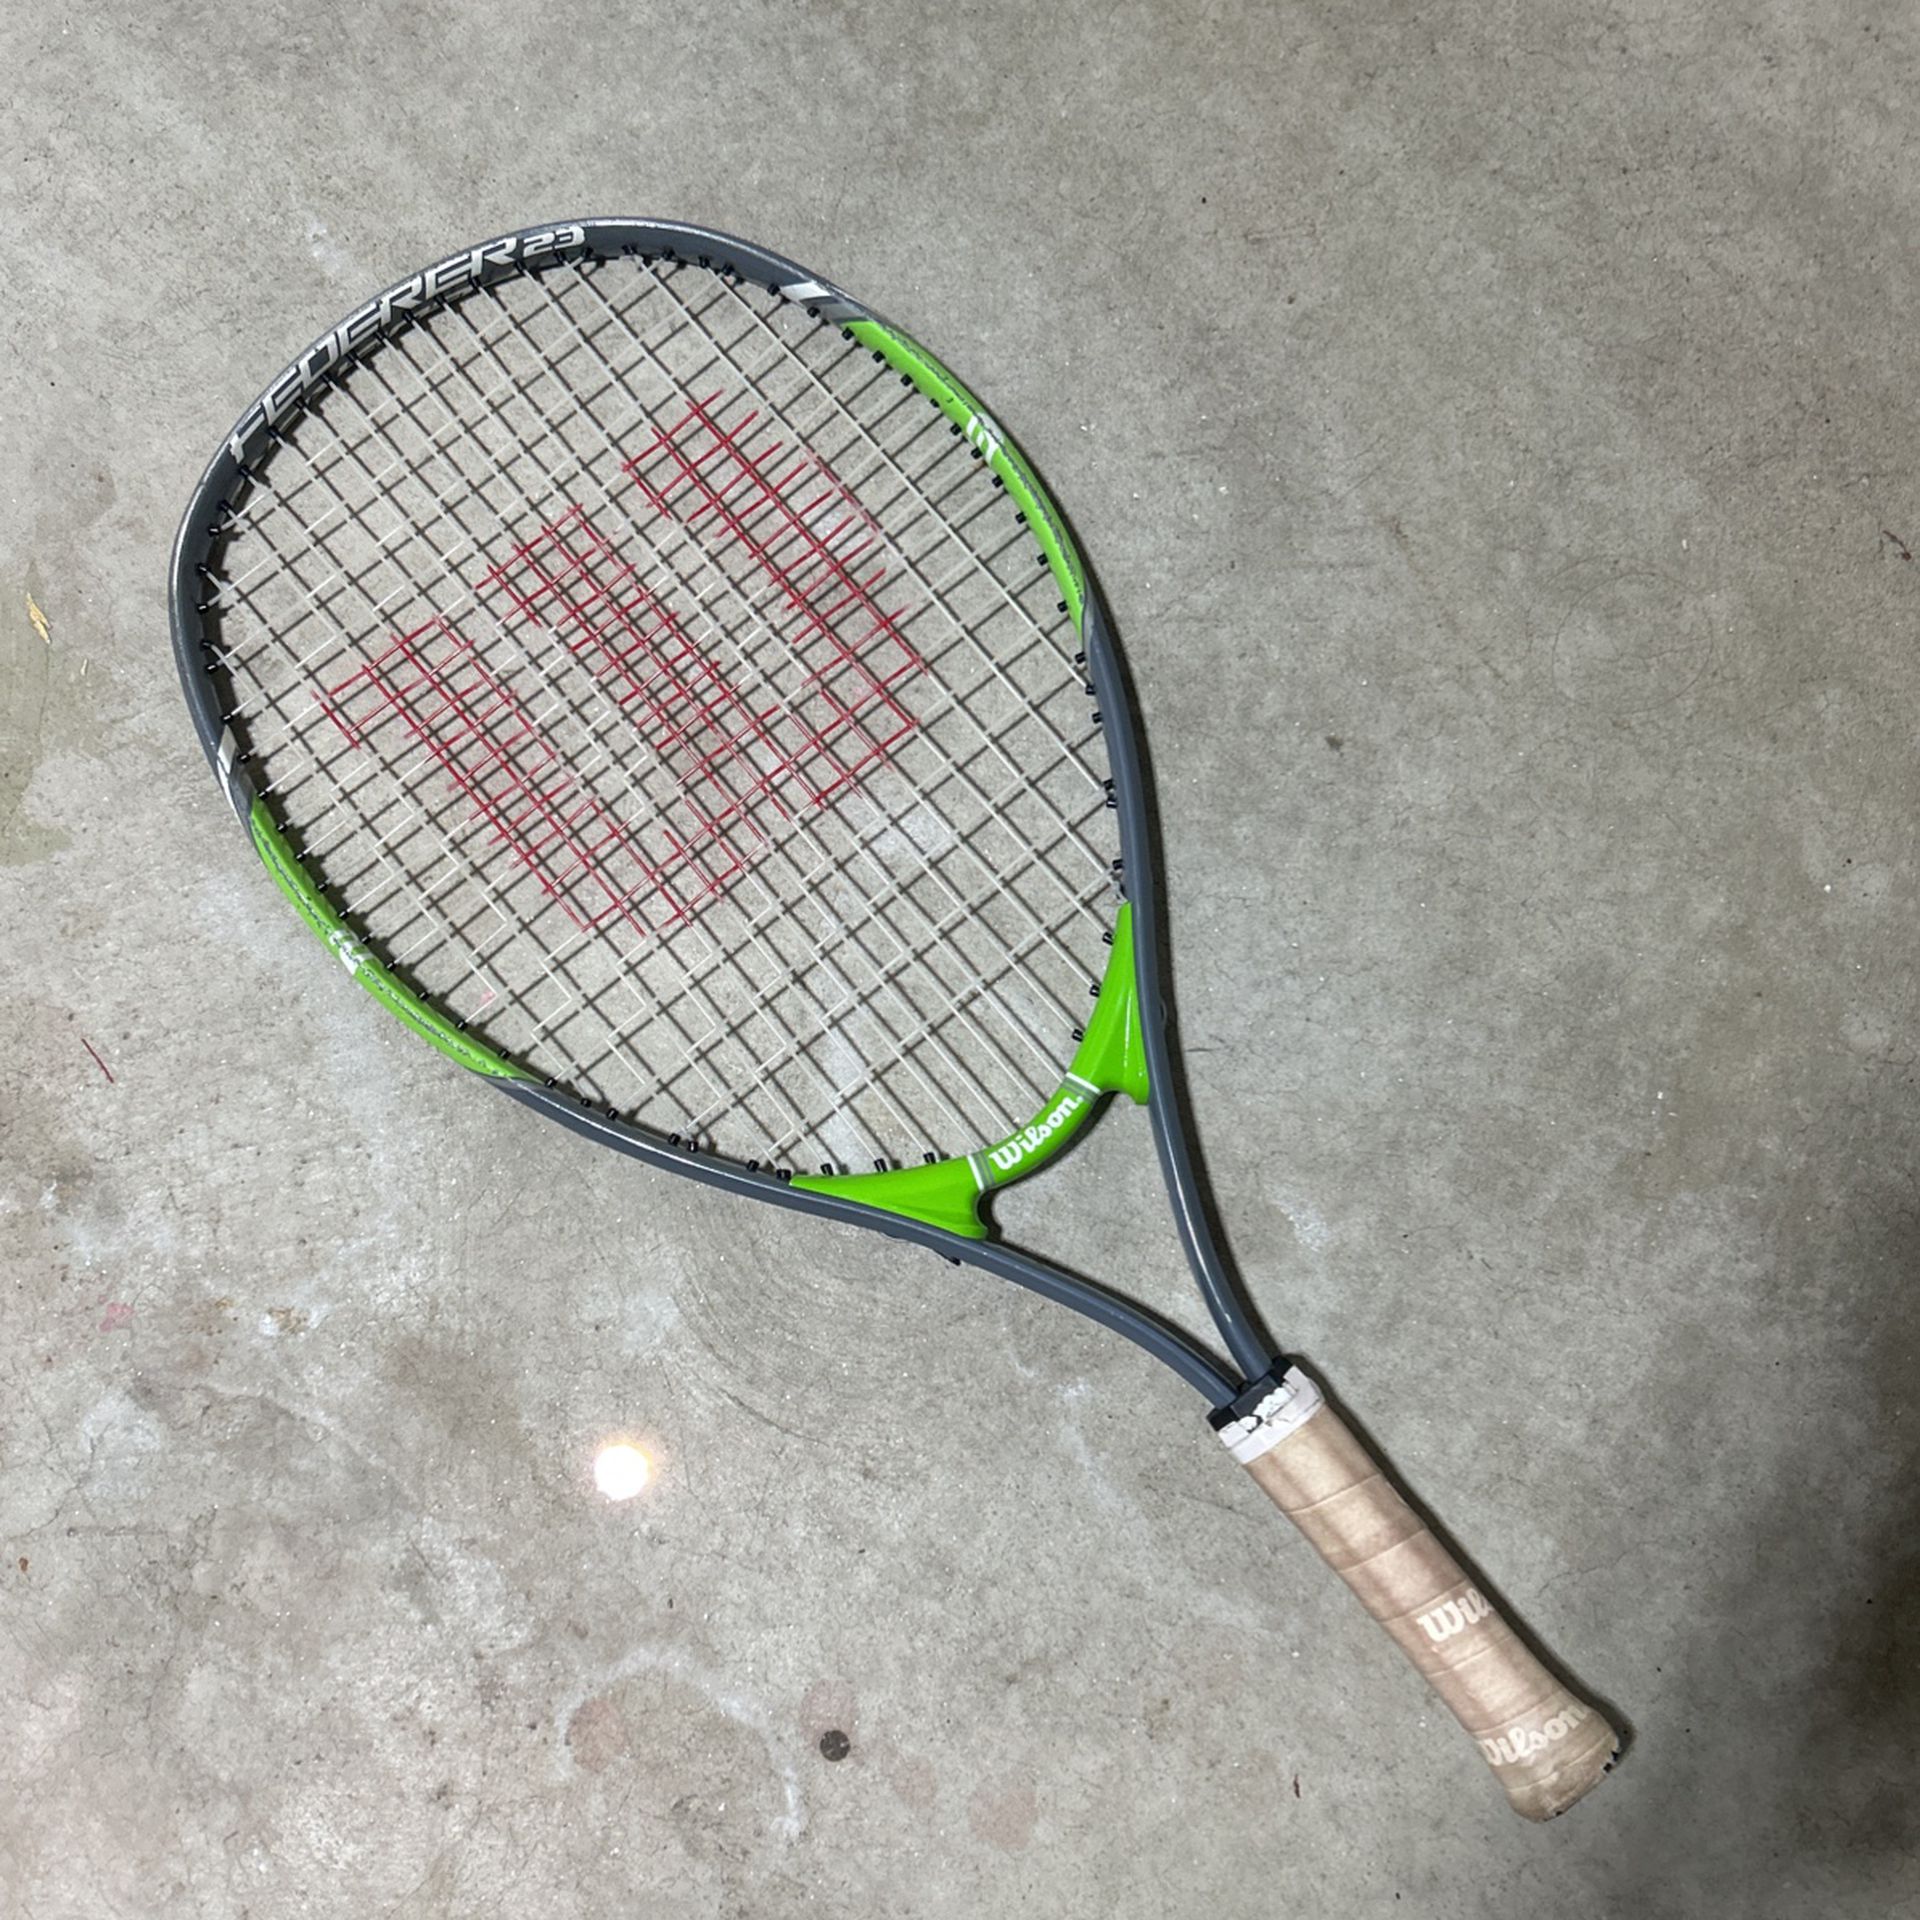 Wilson Kid’s Tennis Racket $5